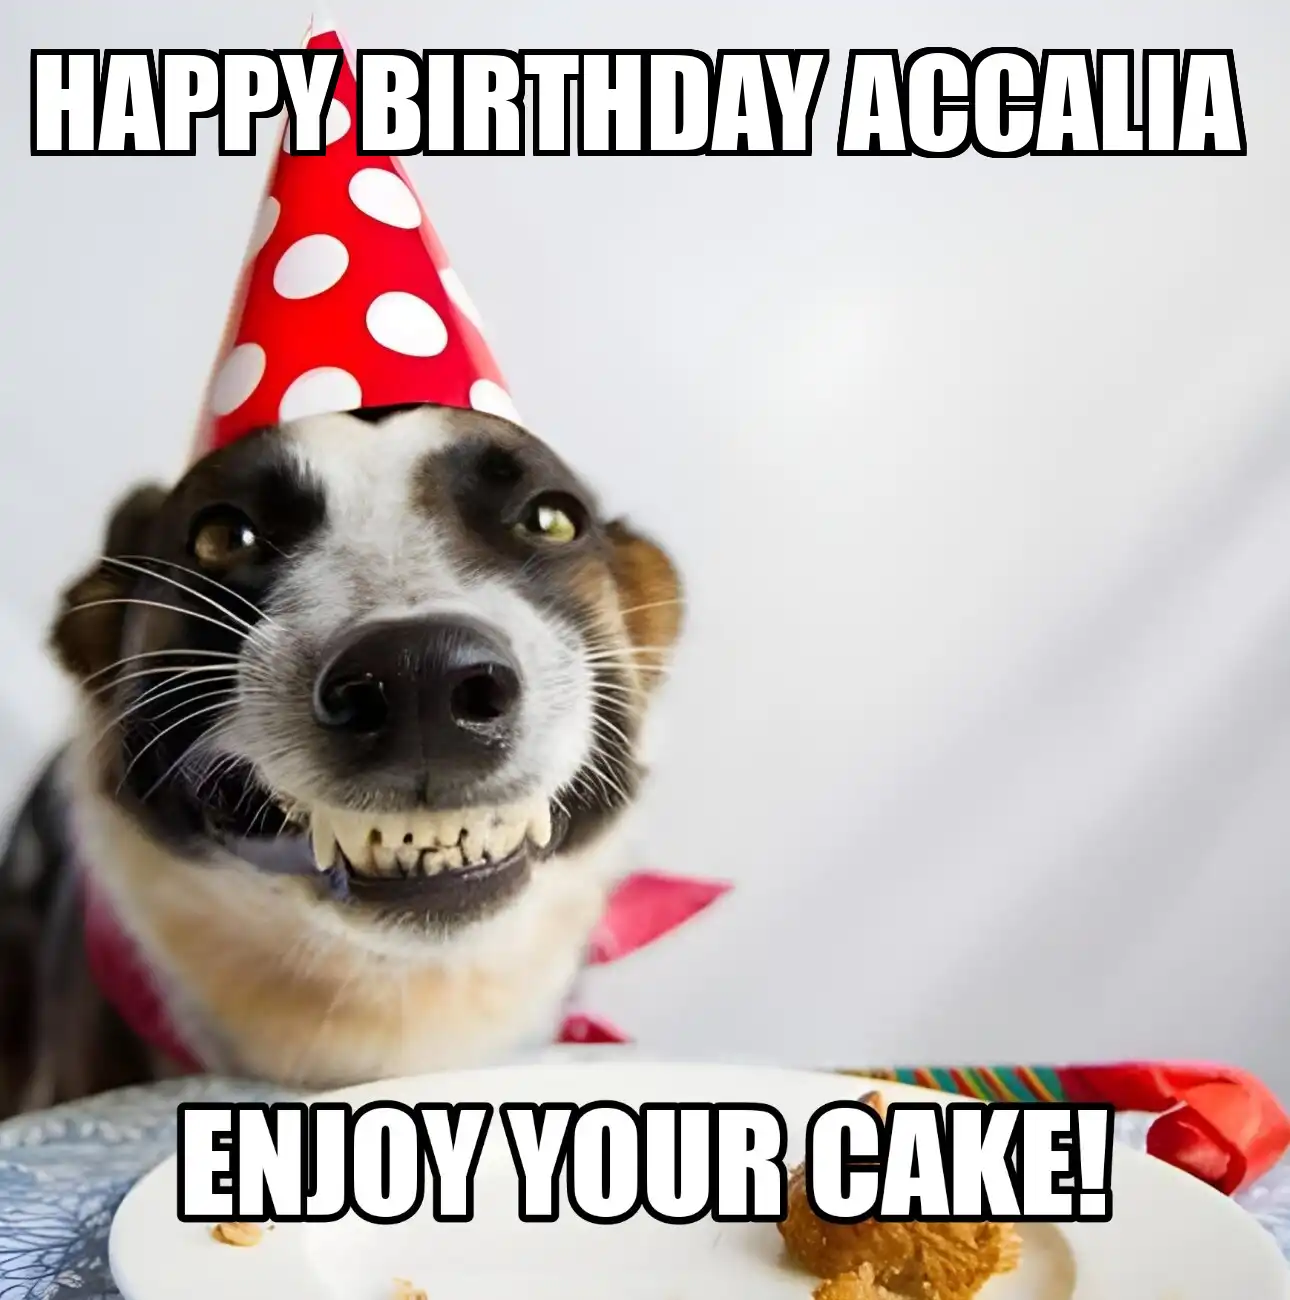 Happy Birthday Accalia Enjoy Your Cake Dog Meme